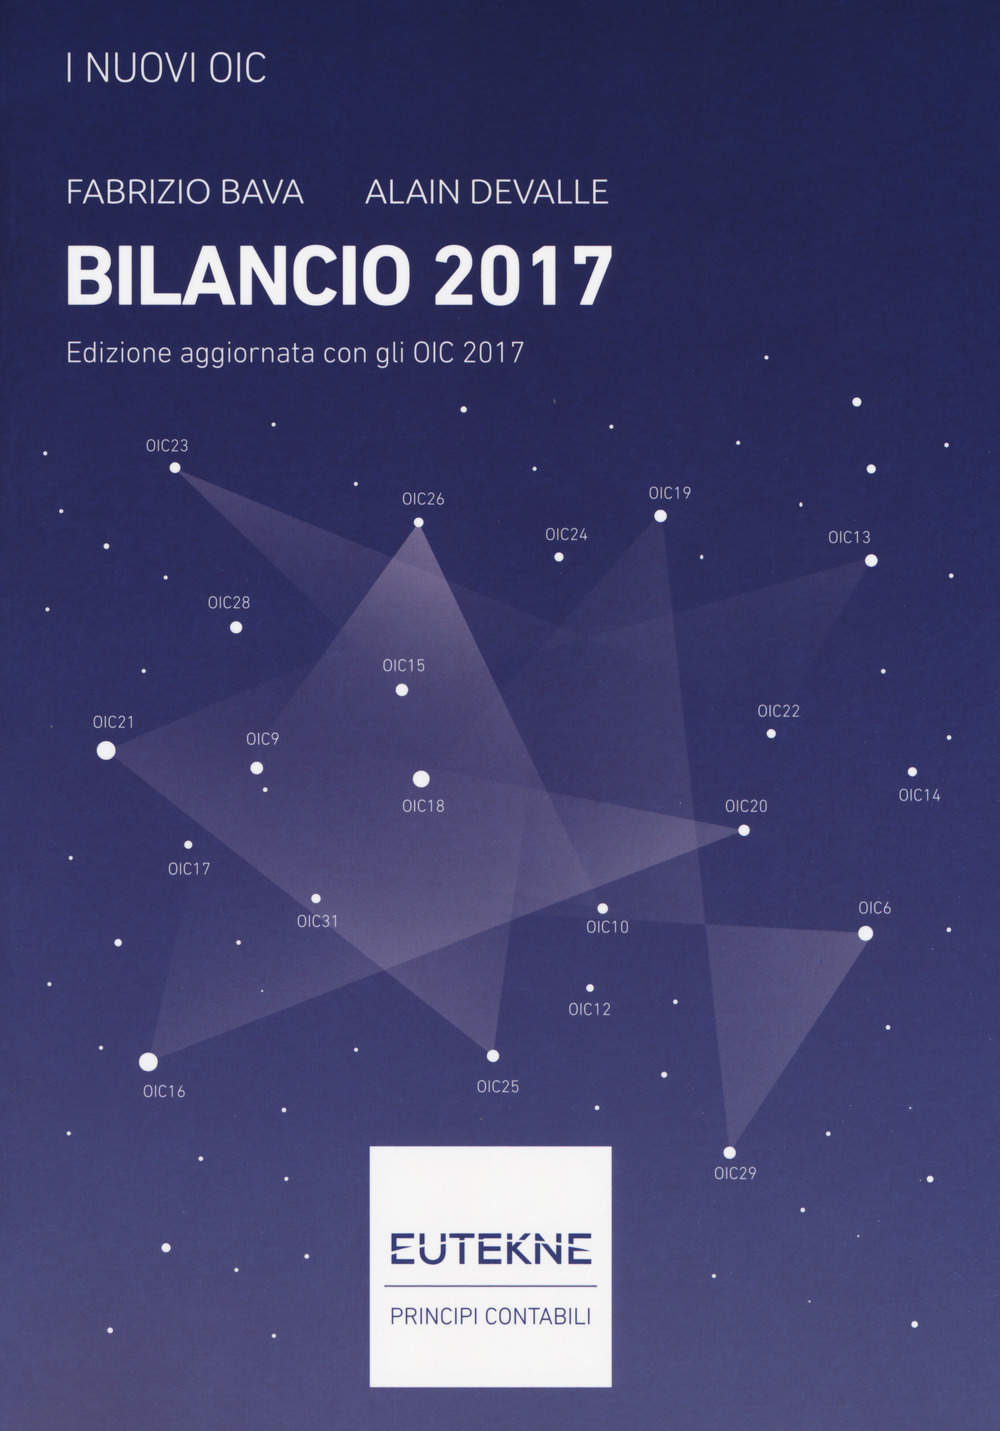 I nuovi OIC. Bilancio 2017